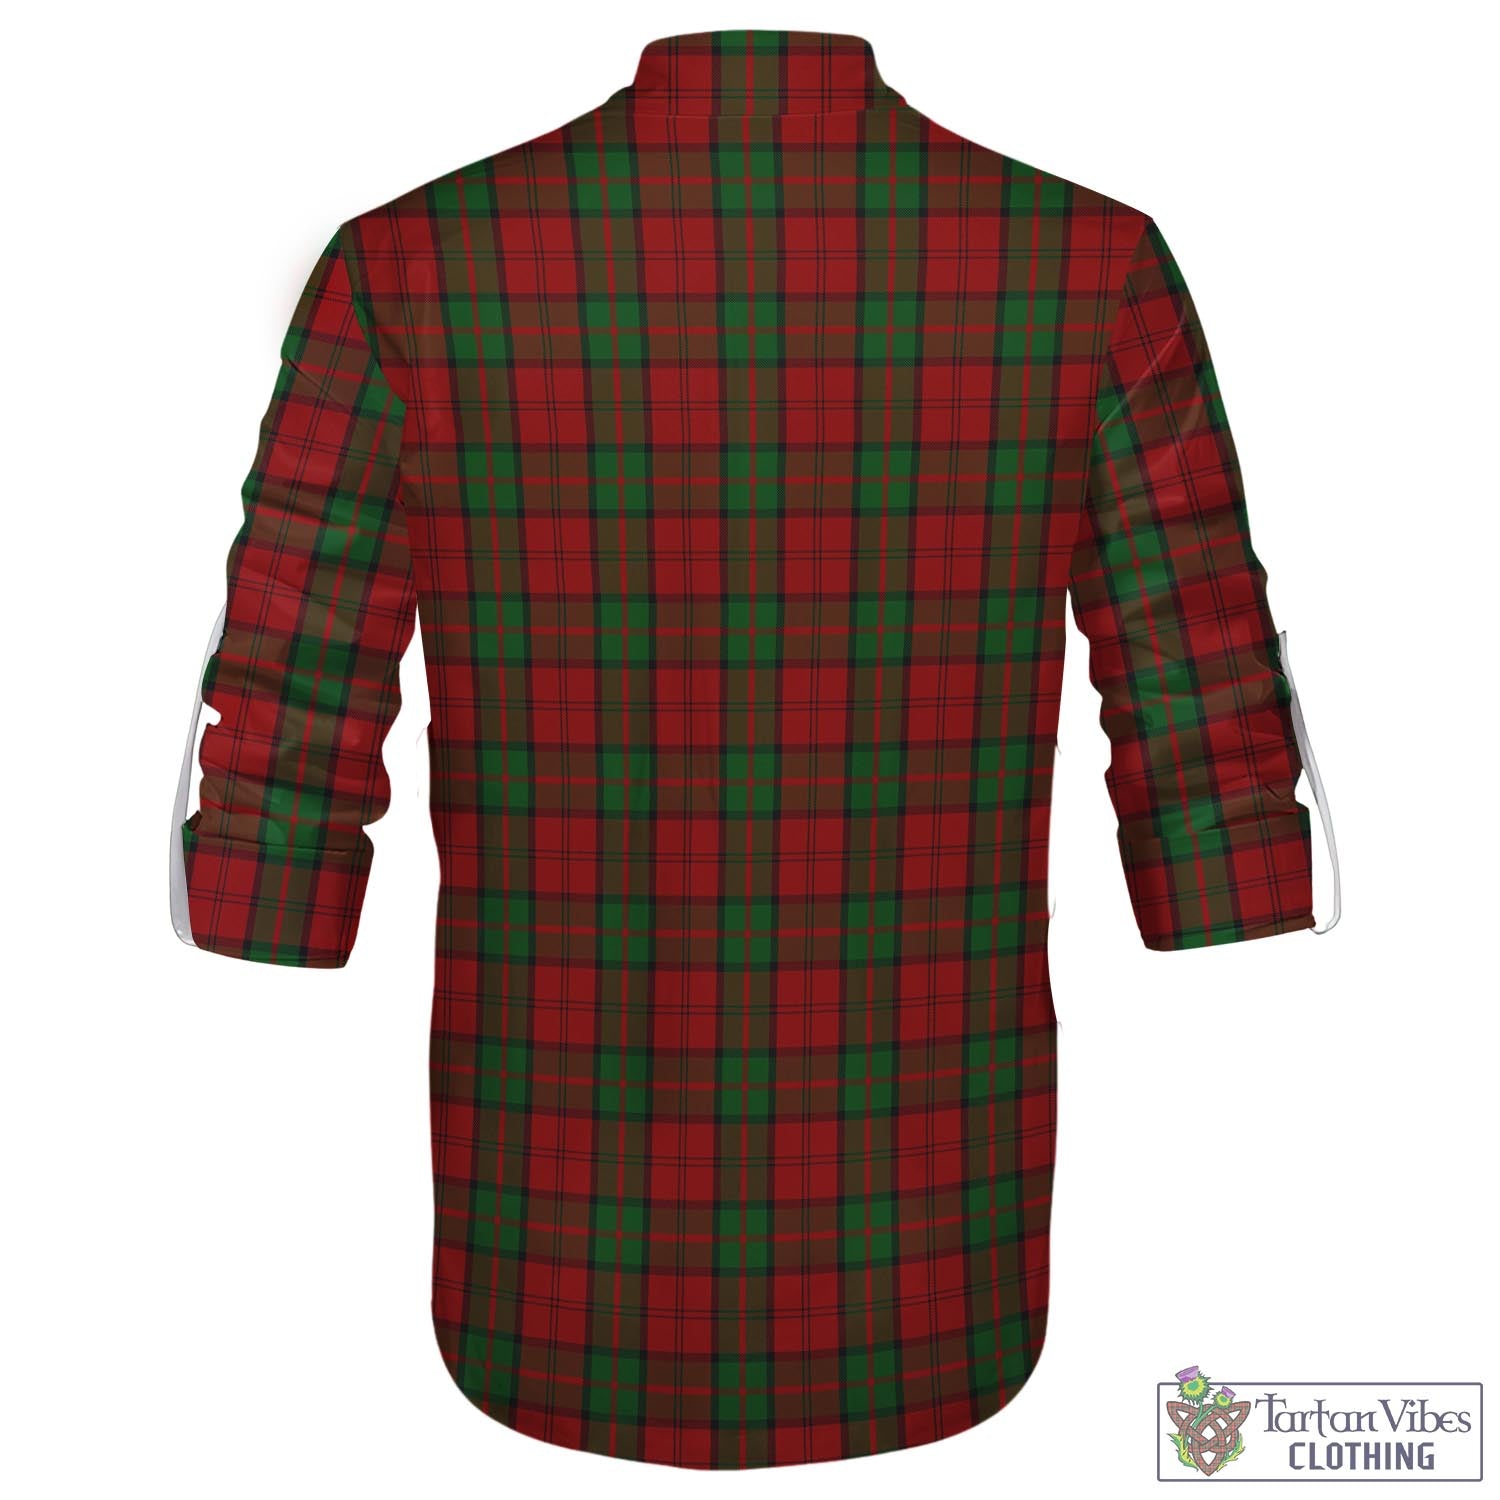 Tartan Vibes Clothing Dunbar Tartan Men's Scottish Traditional Jacobite Ghillie Kilt Shirt